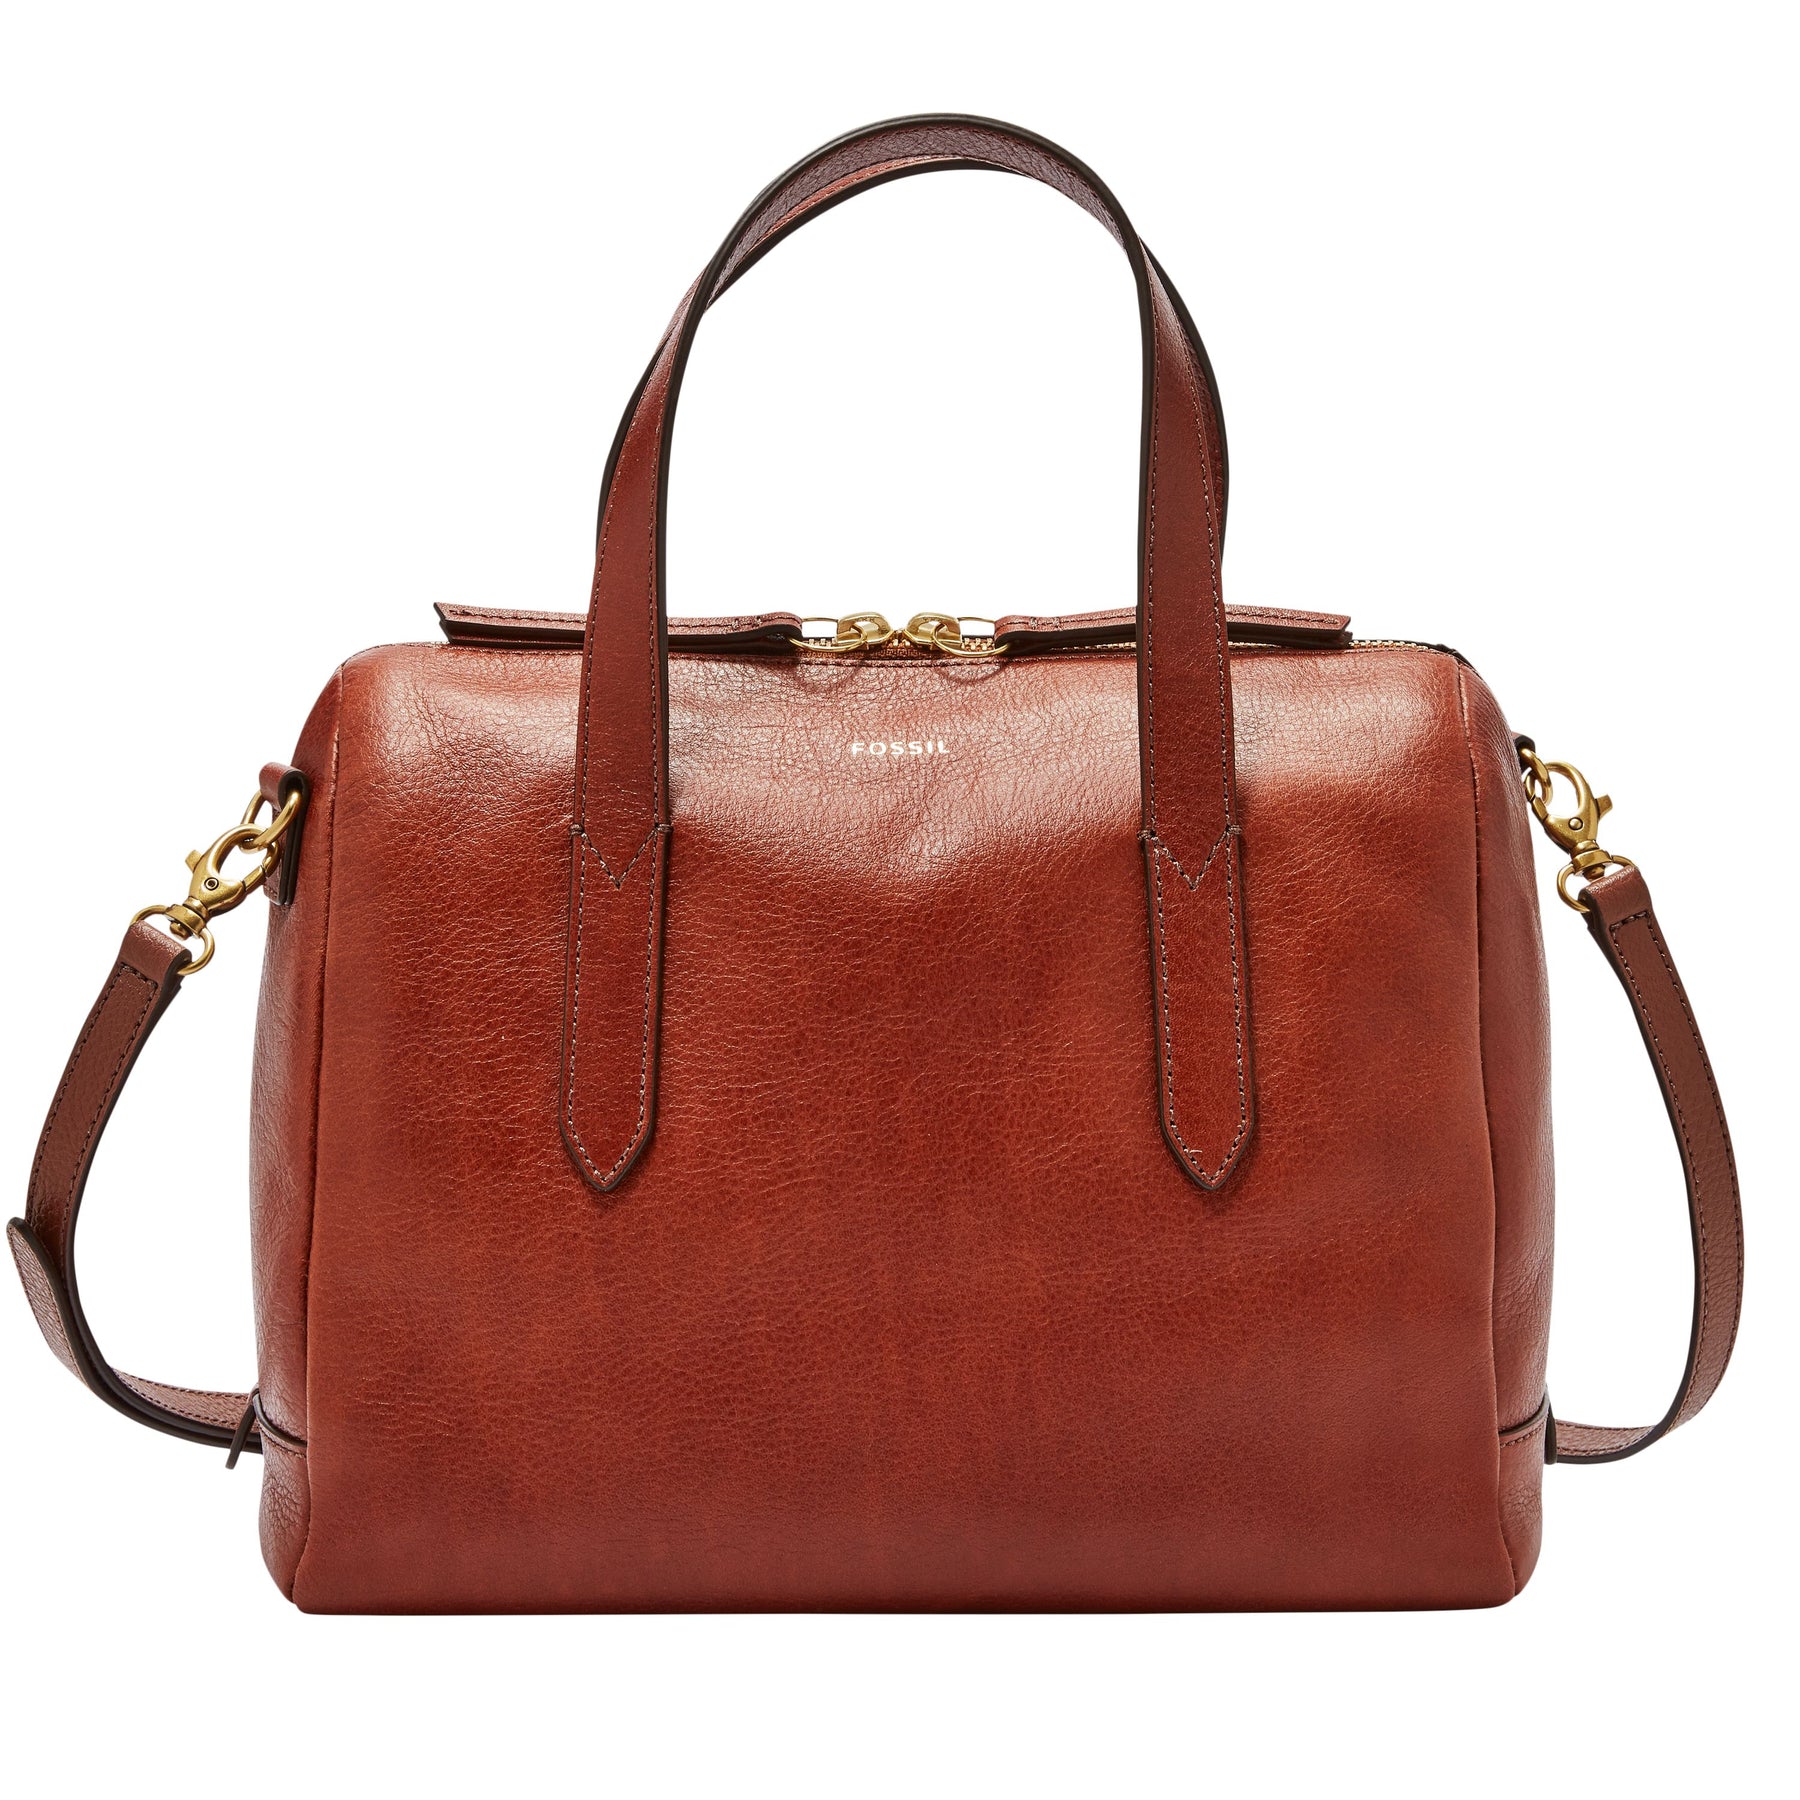 Fossil Women's Sydney Leather Satchel Purse Handbag